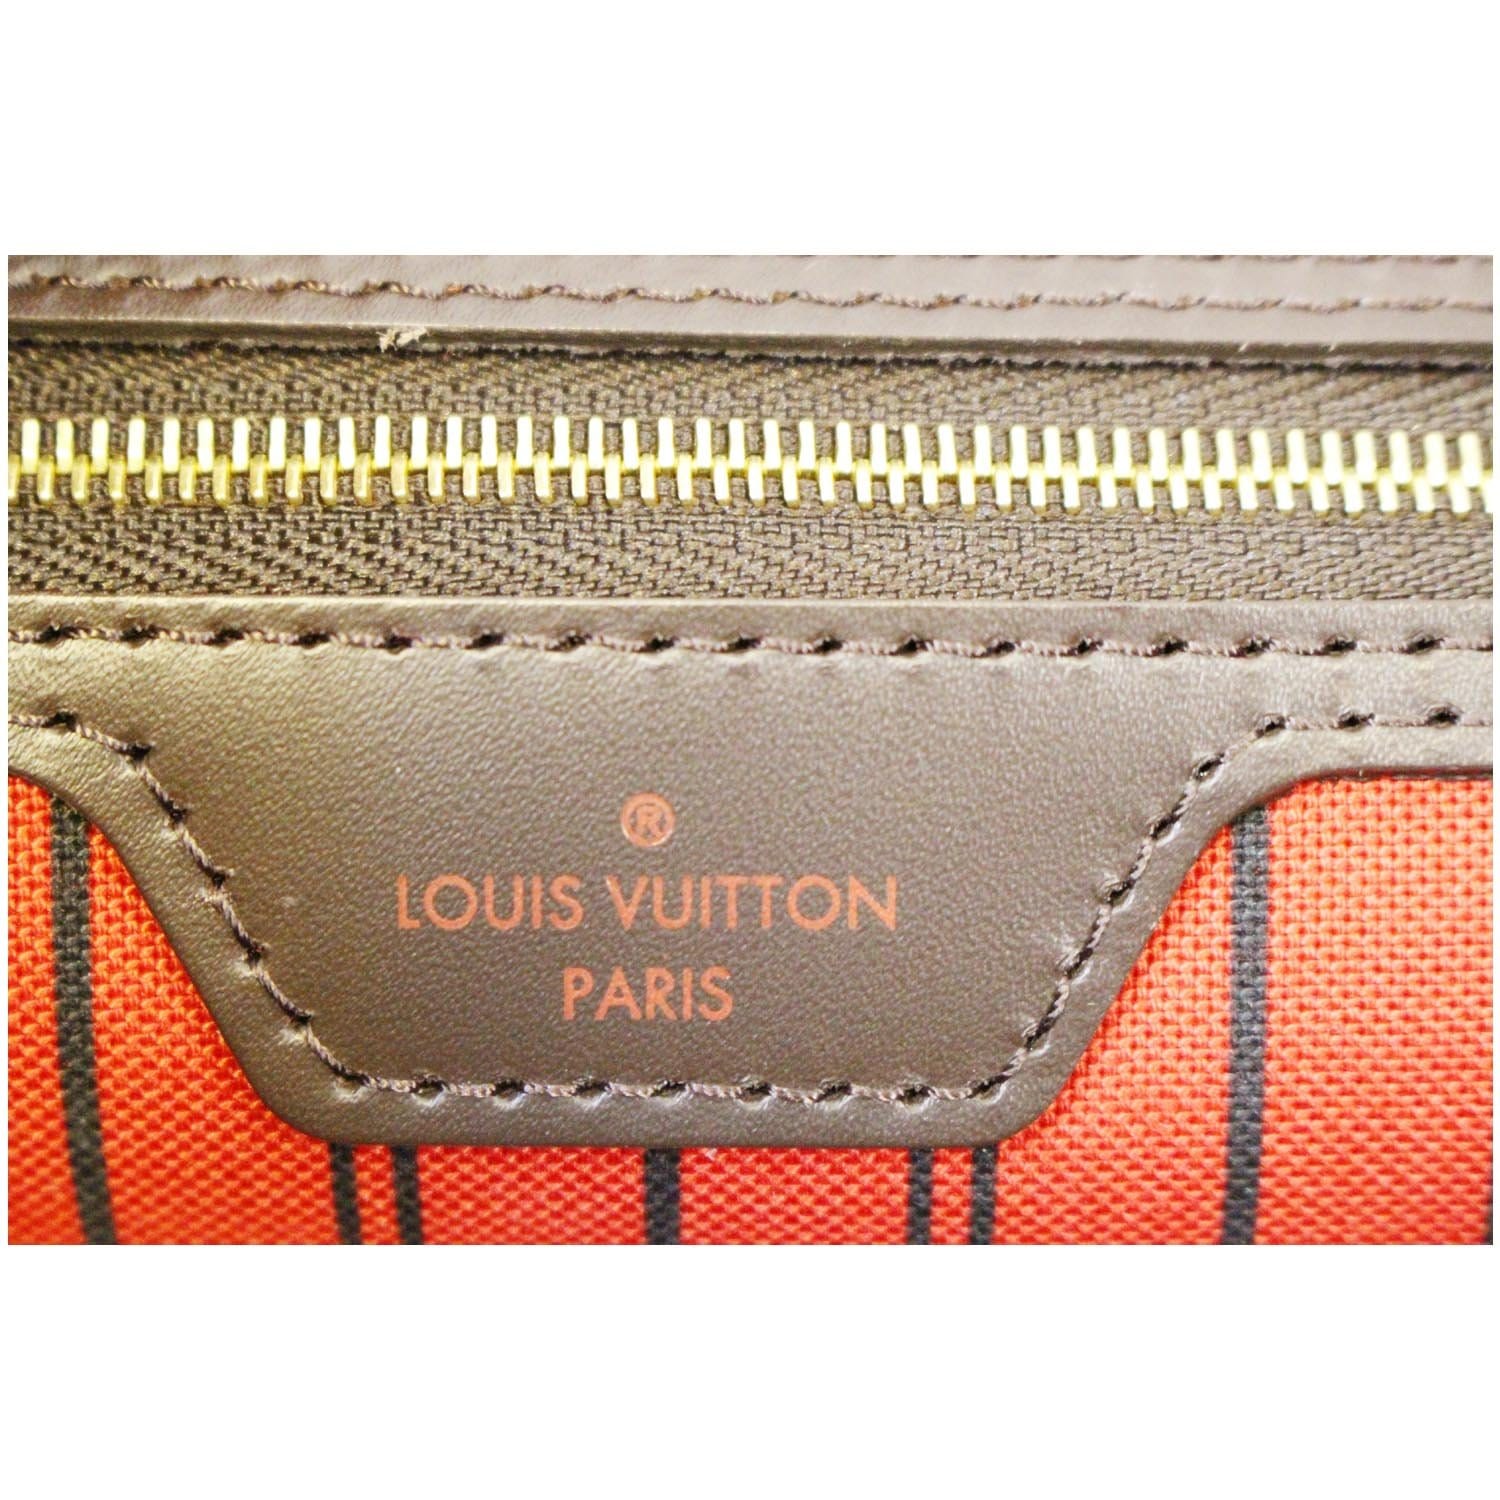 Real Louis Vuitton Neverfull Vs Fake